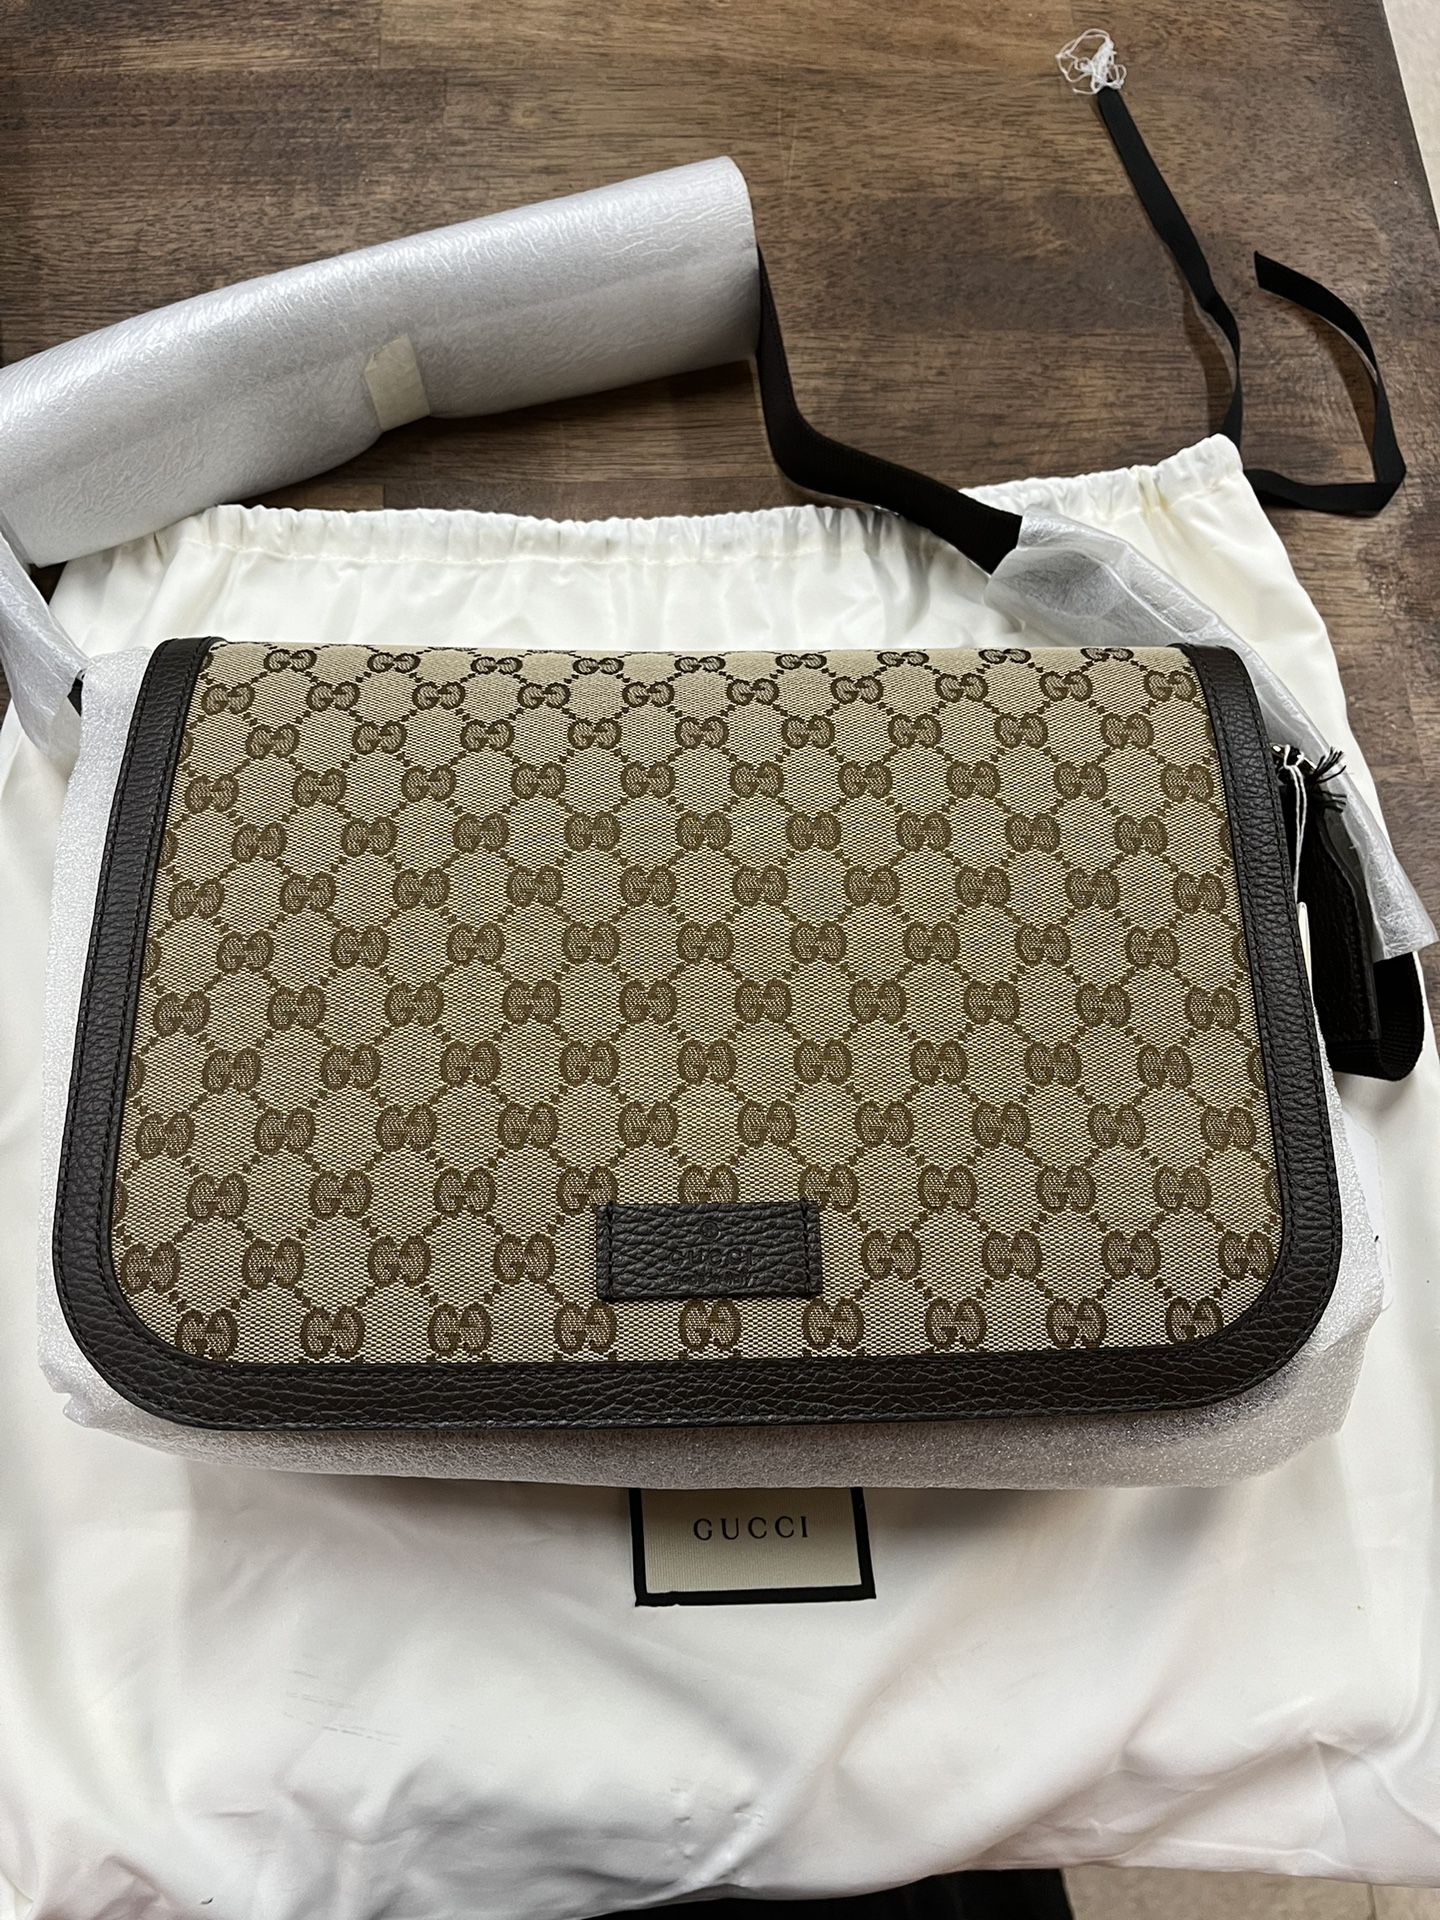 Gucci Messenger Bag Brand New